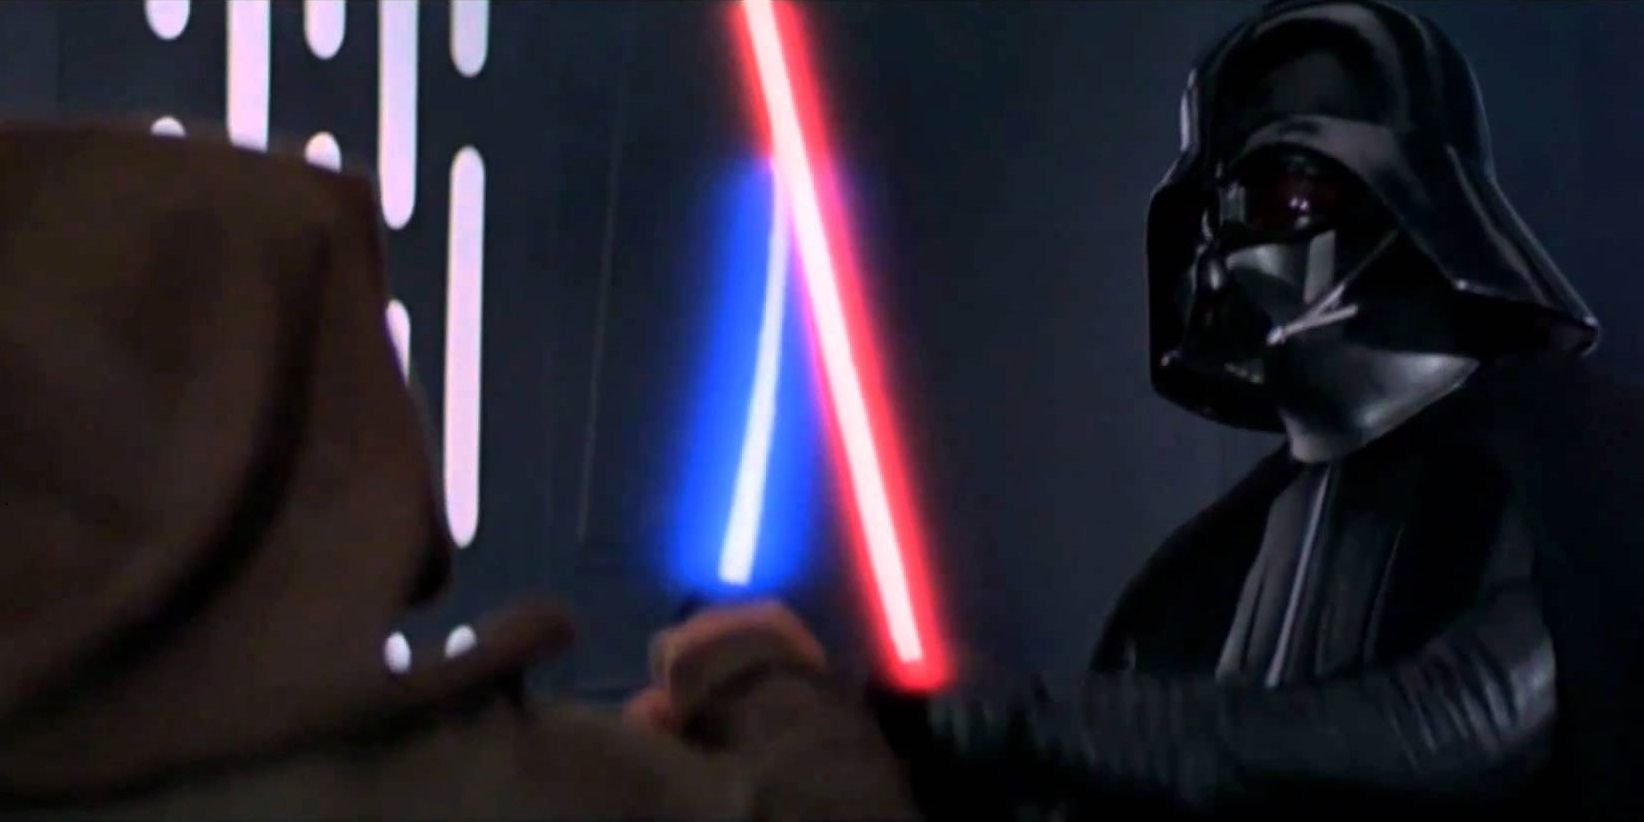 Darth Vader and Obi-Wan Kenobi duelling in Star Wars A New Hope